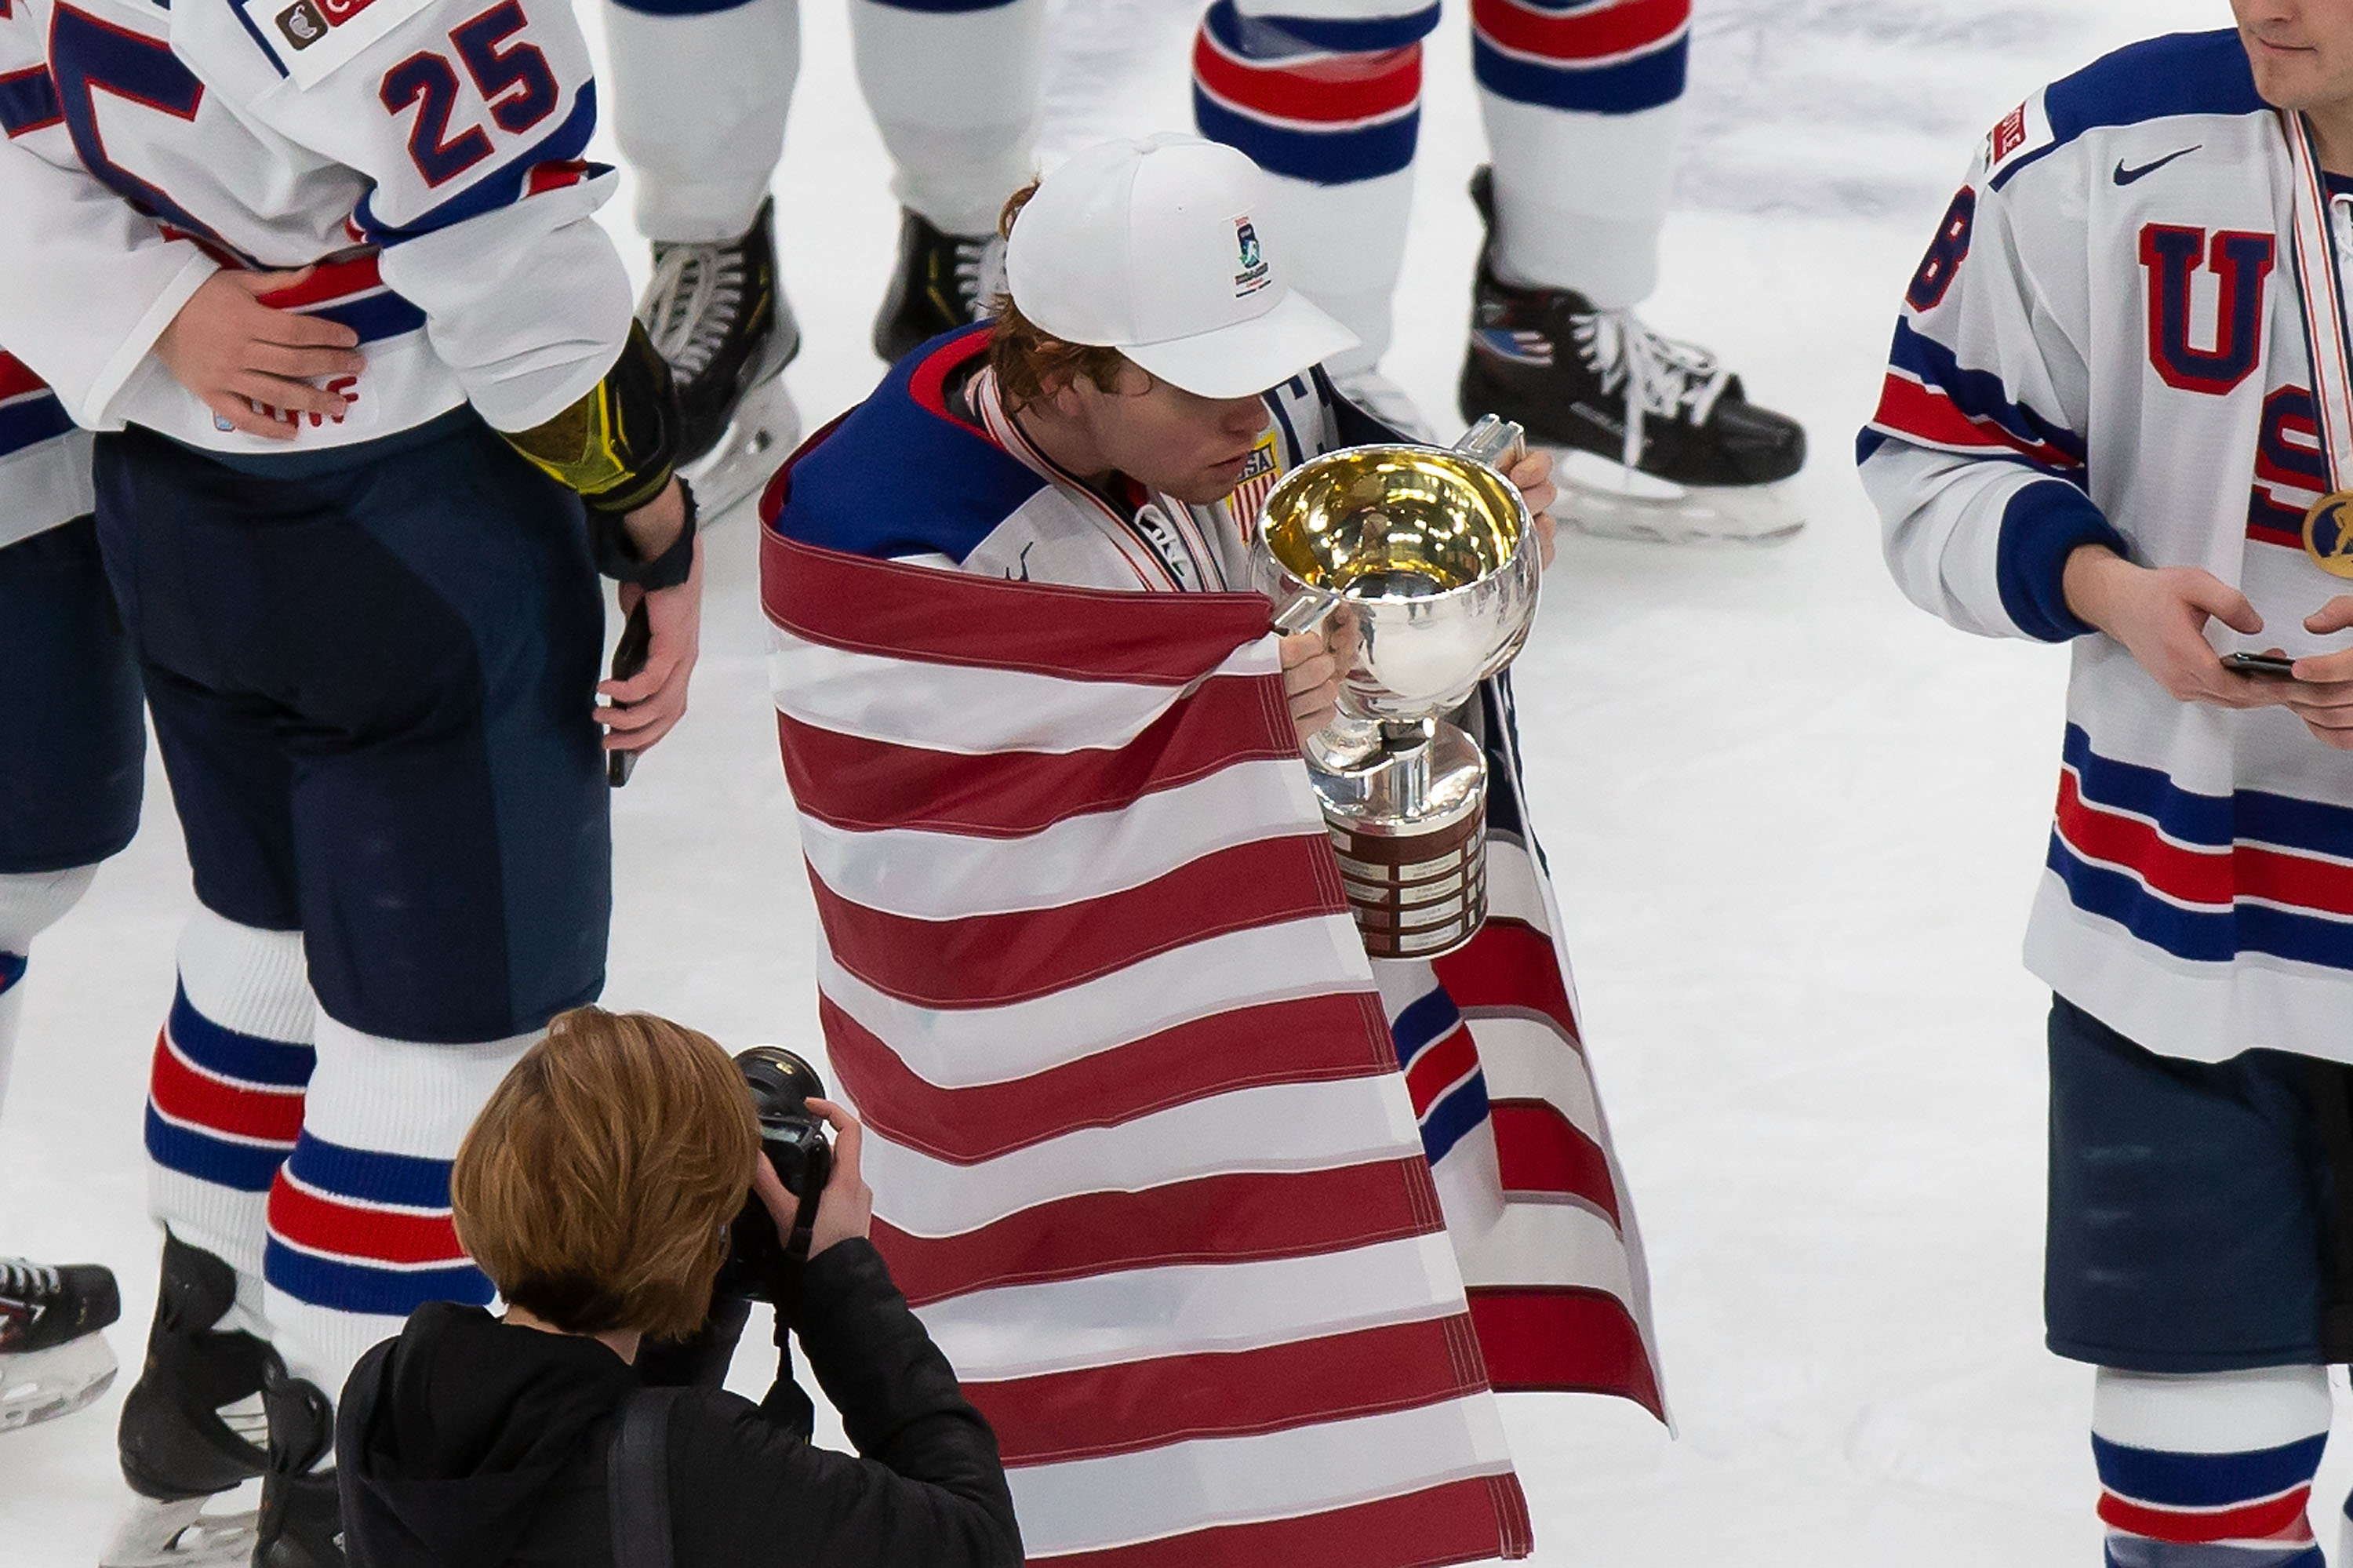 Canada v United States: Gold Medal Game - 2021 IIHF World Junior Championship